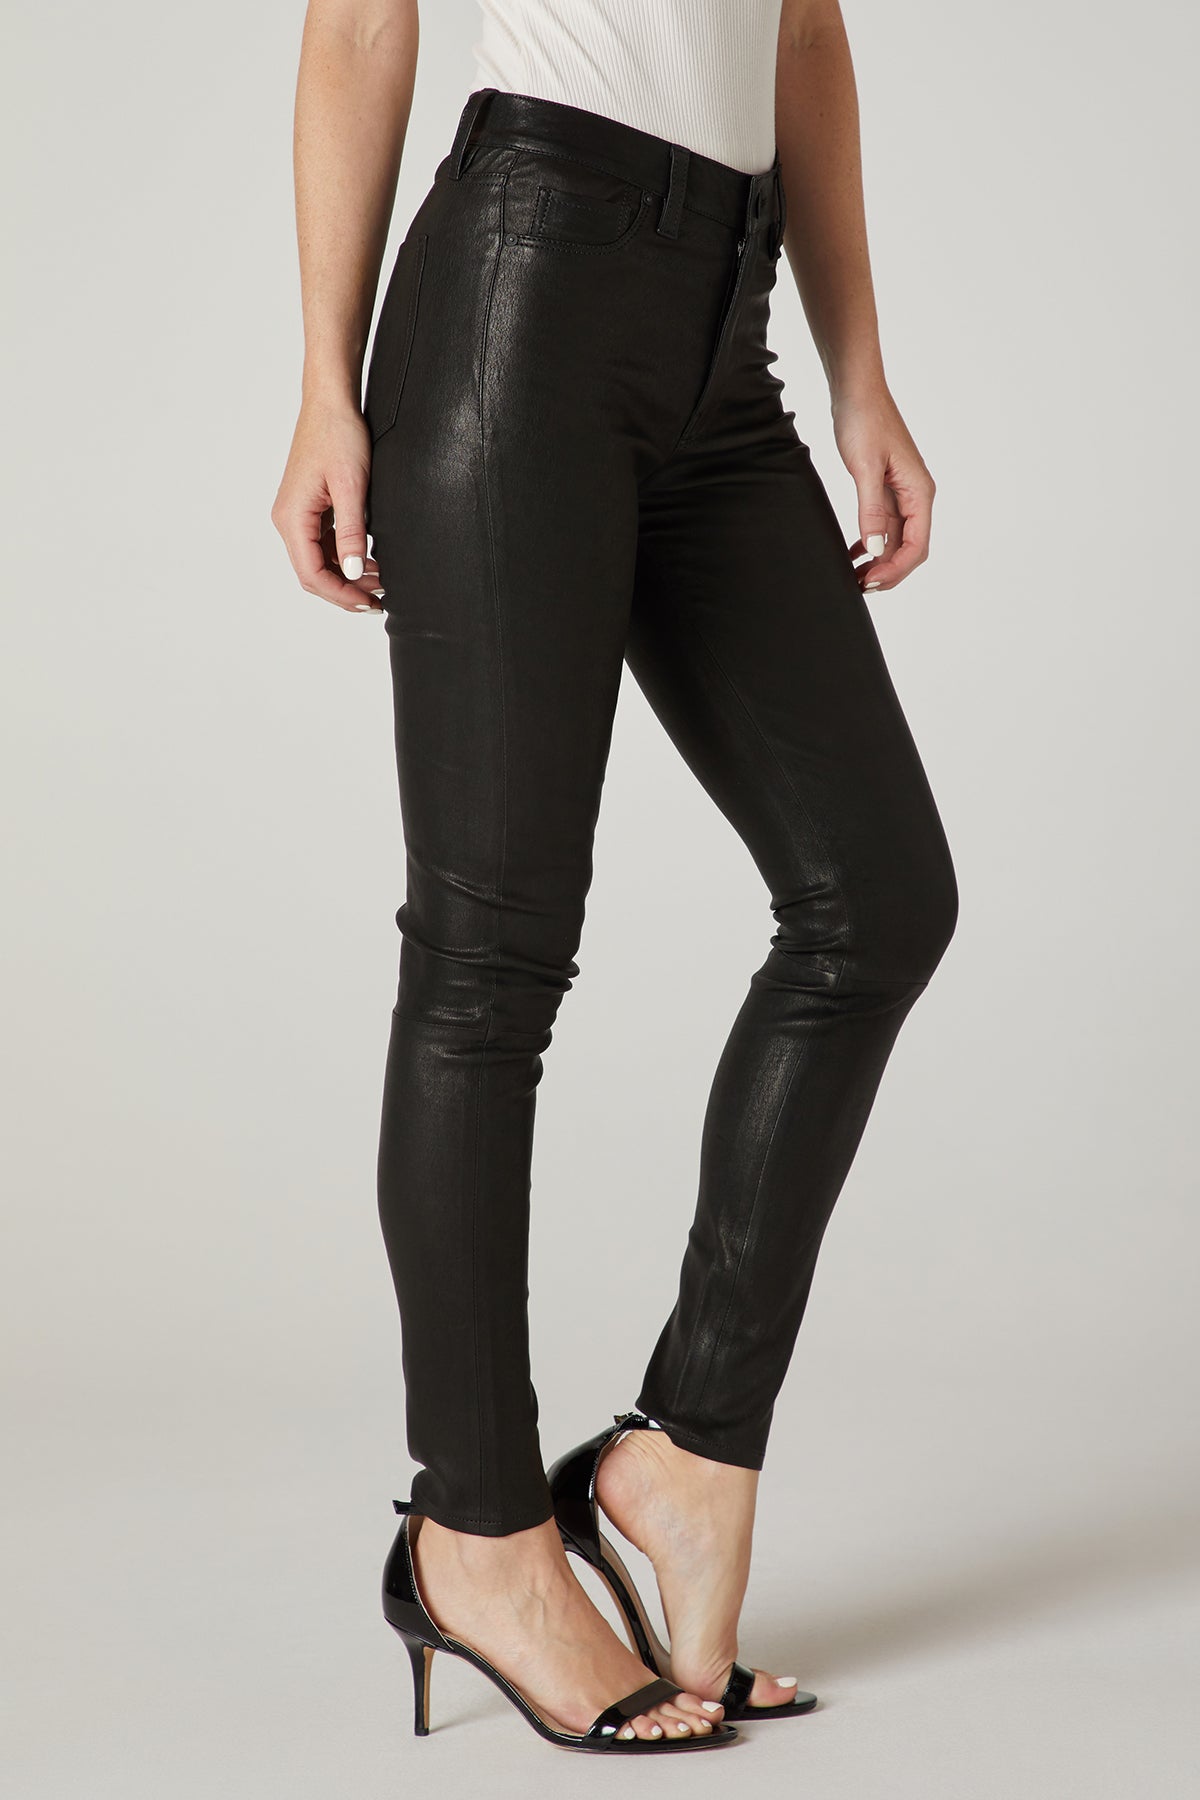 Fesfesfes Women Artificial Leather Pants Casual Pockets Slim Fit Pants  Leather small feet split zip Long Pants Sale Clearance - Walmart.com